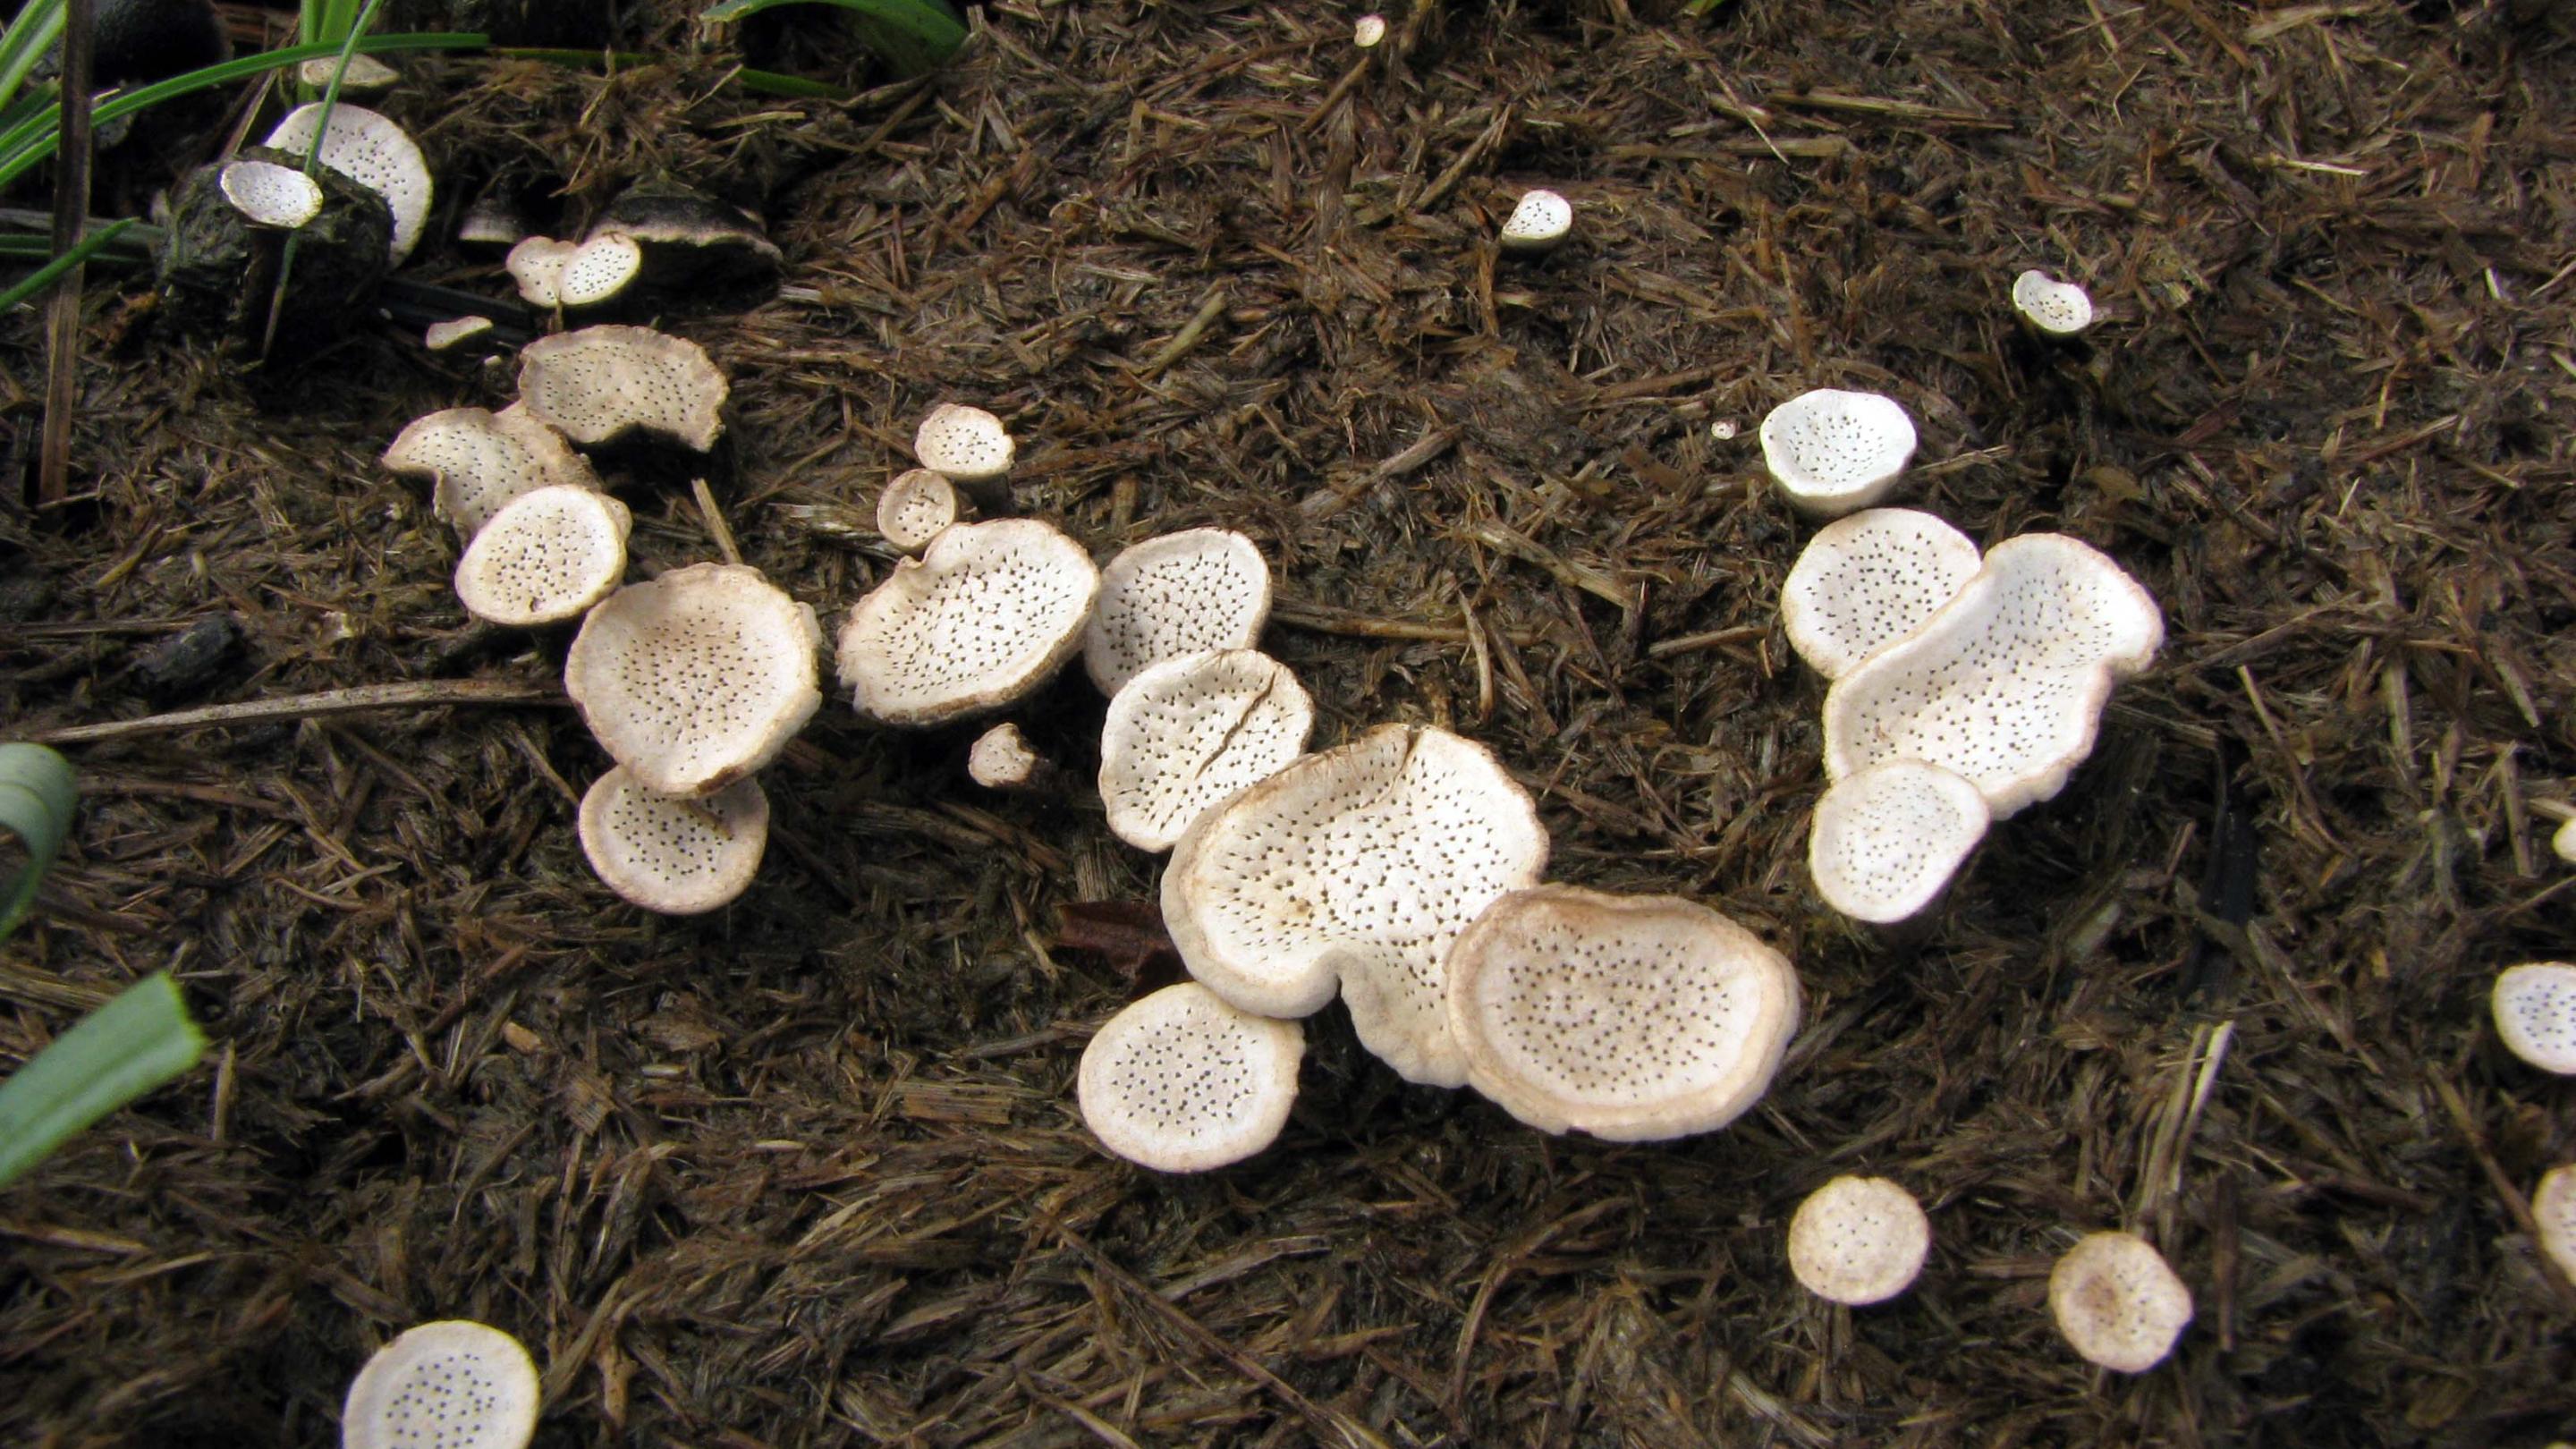 Rare British fungi: genuinely uncommon or simply ignored? | Kew